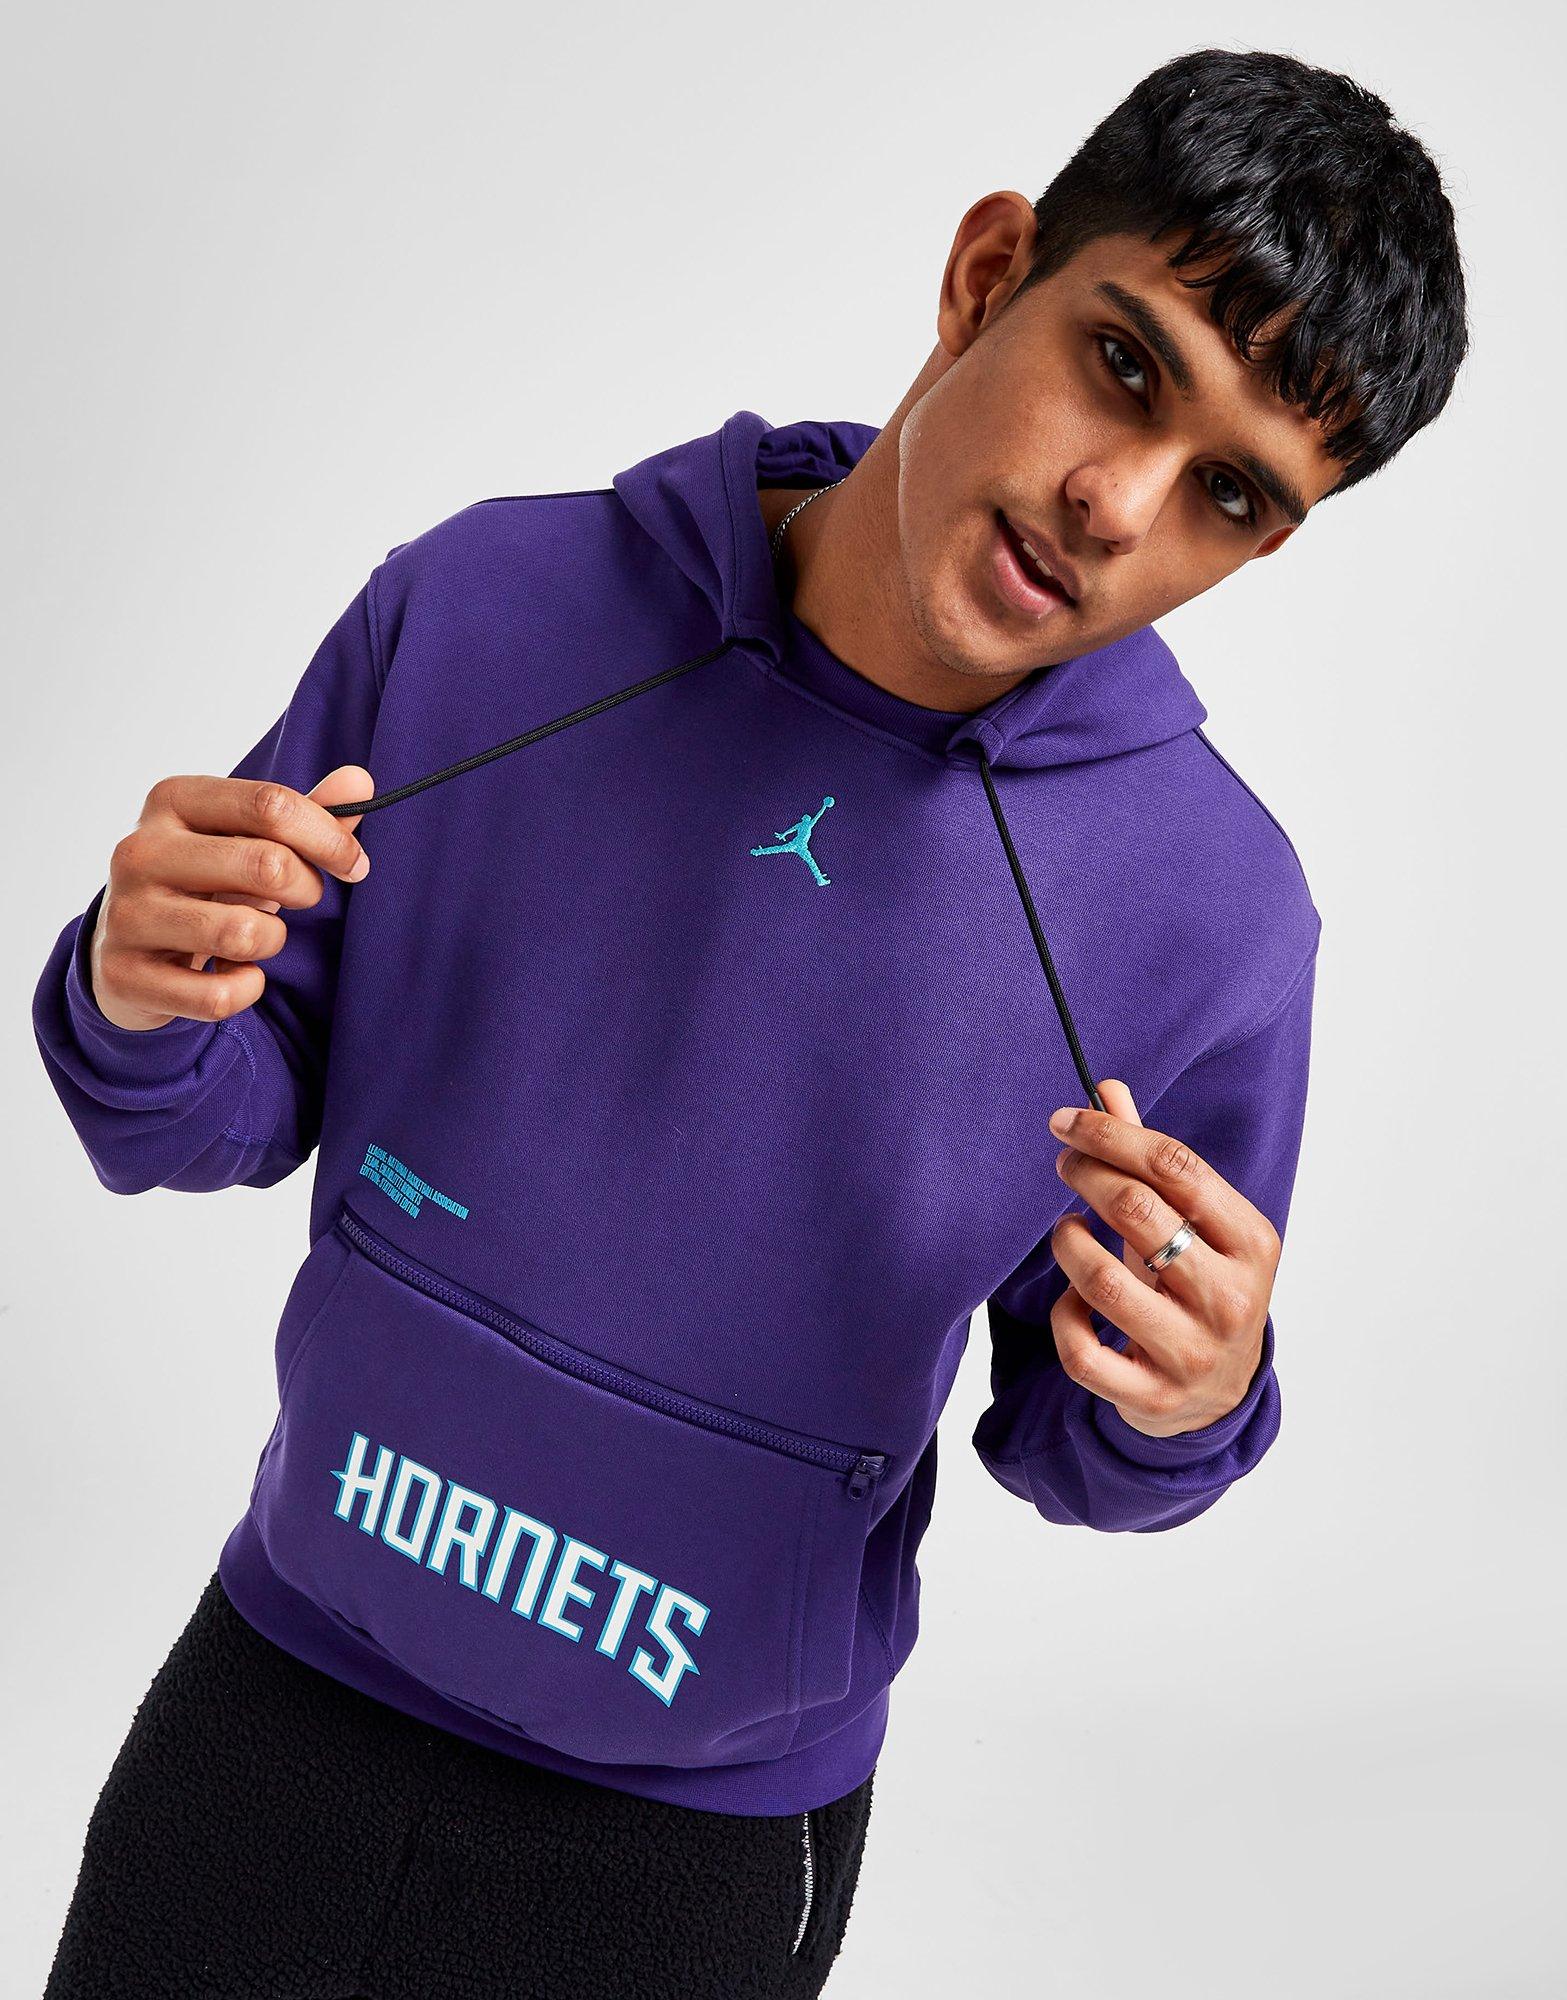 Charlotte Hornets Mono Logo Crew Sweatshirt - Mens